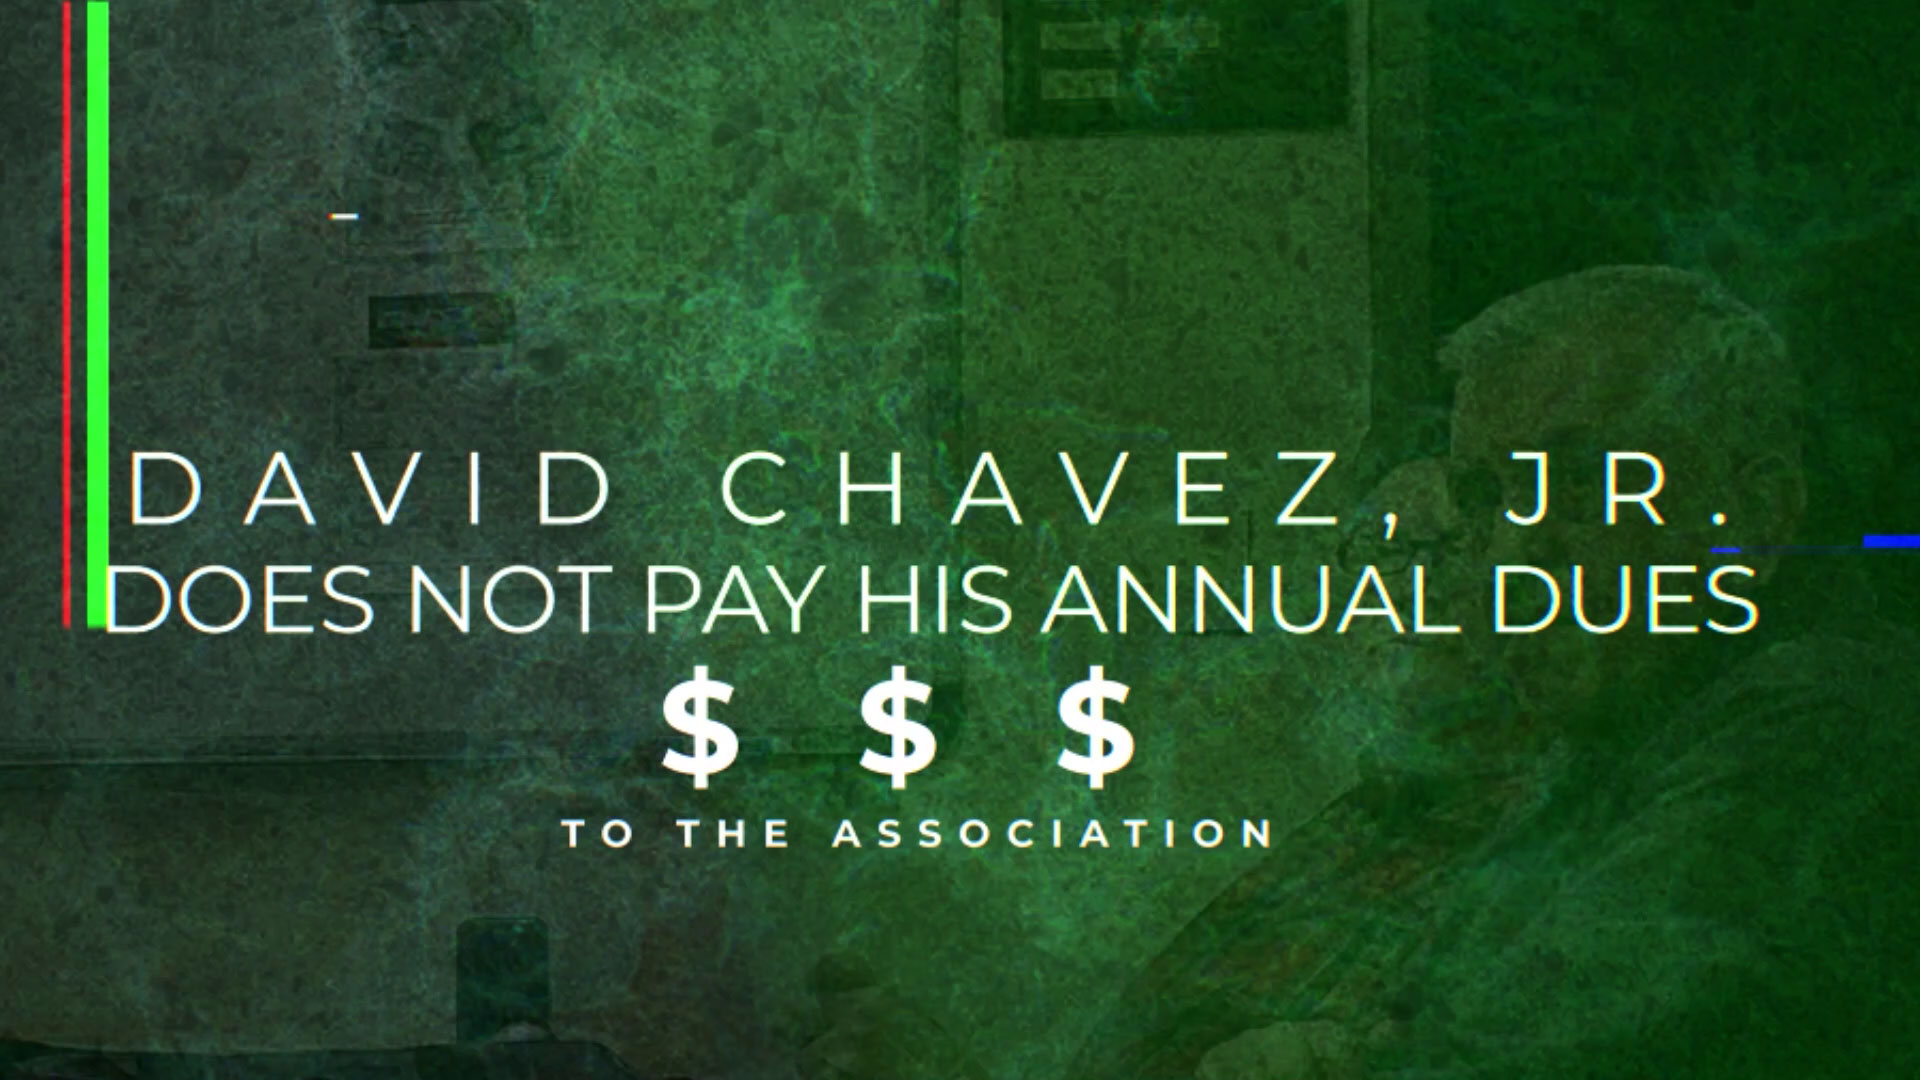 David Chavez, Jr., Treasurer, El Mirador Homeowners Association does not pay Annual Dues